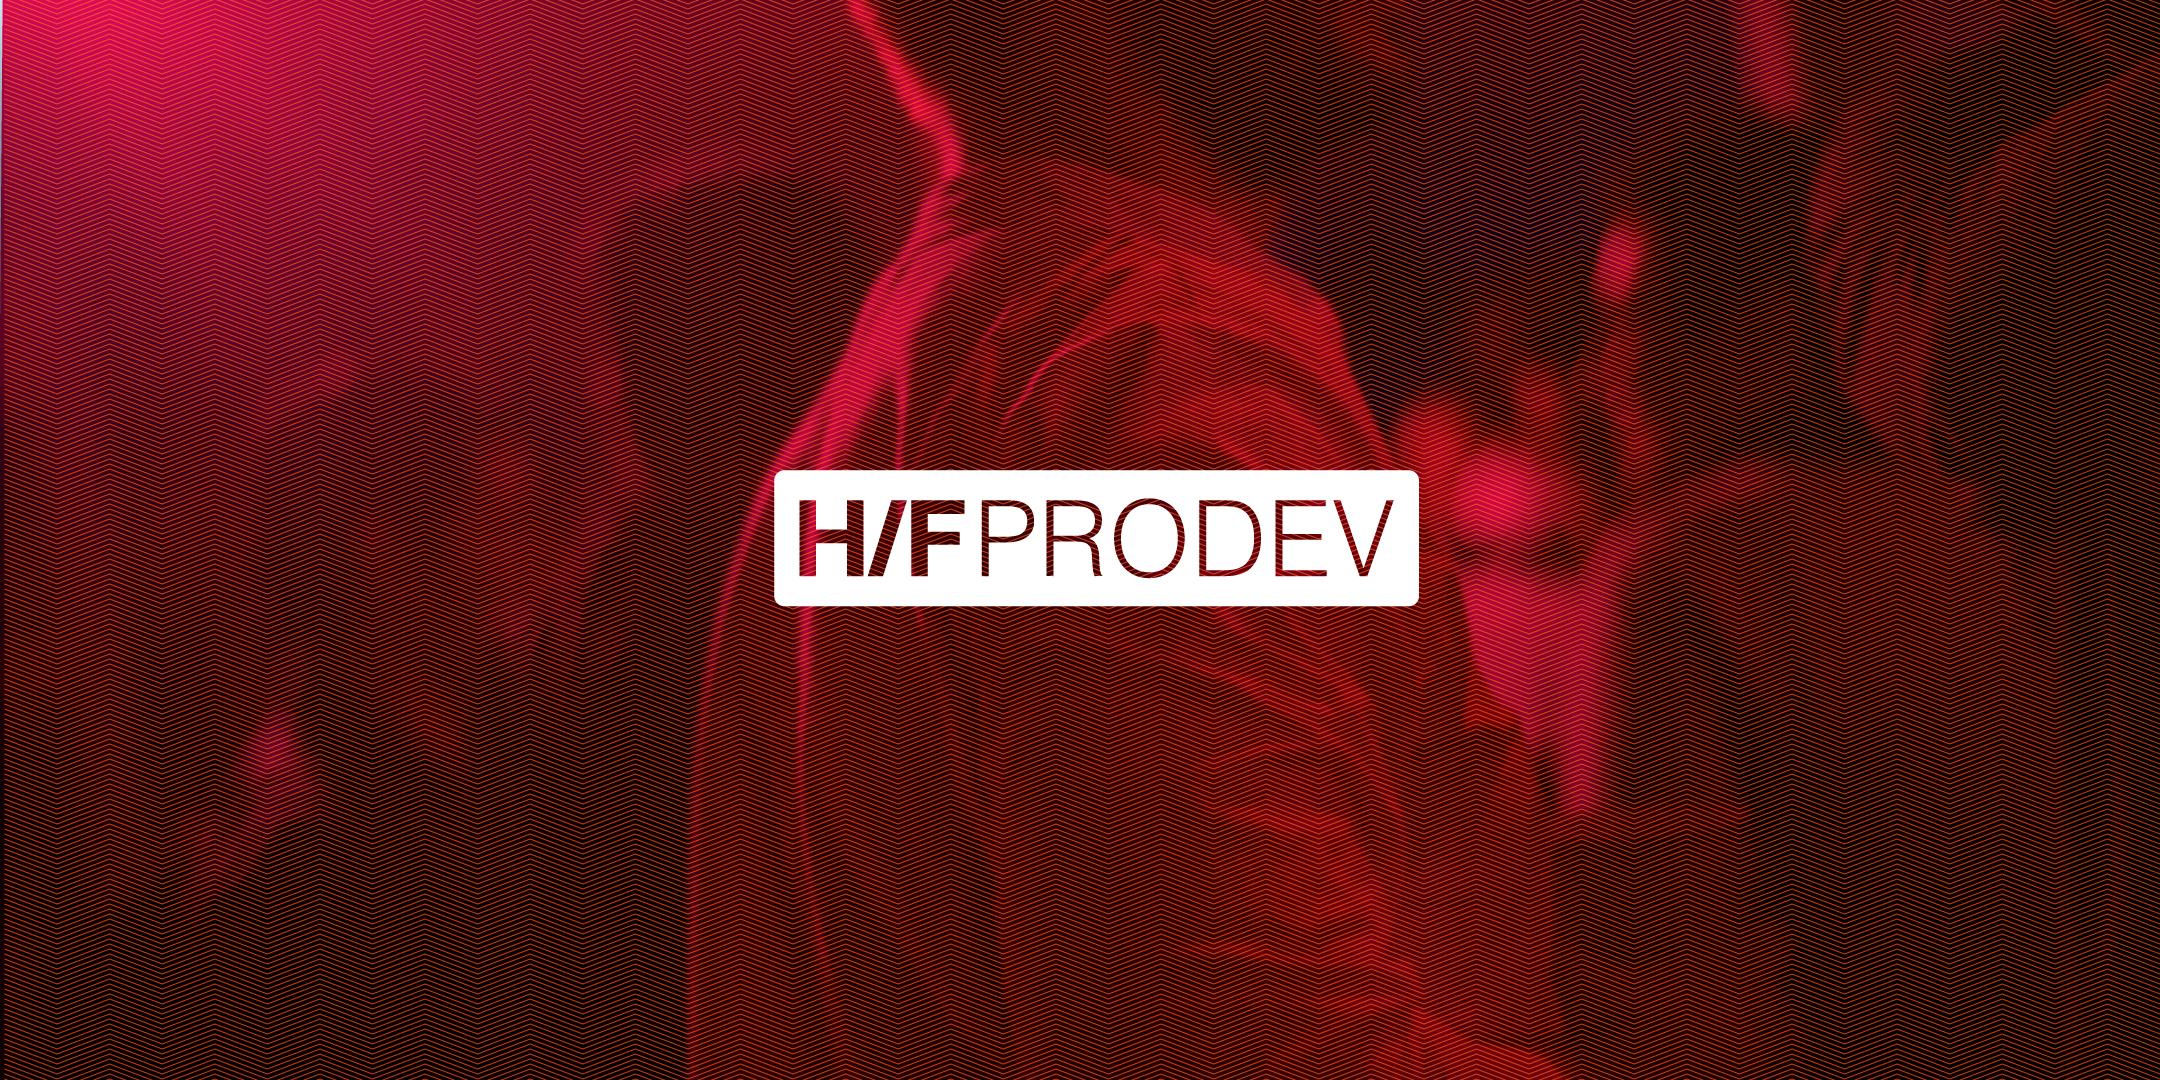 H/F Prodev - Fireside chat Gilberto Ávalos [Indiefy]